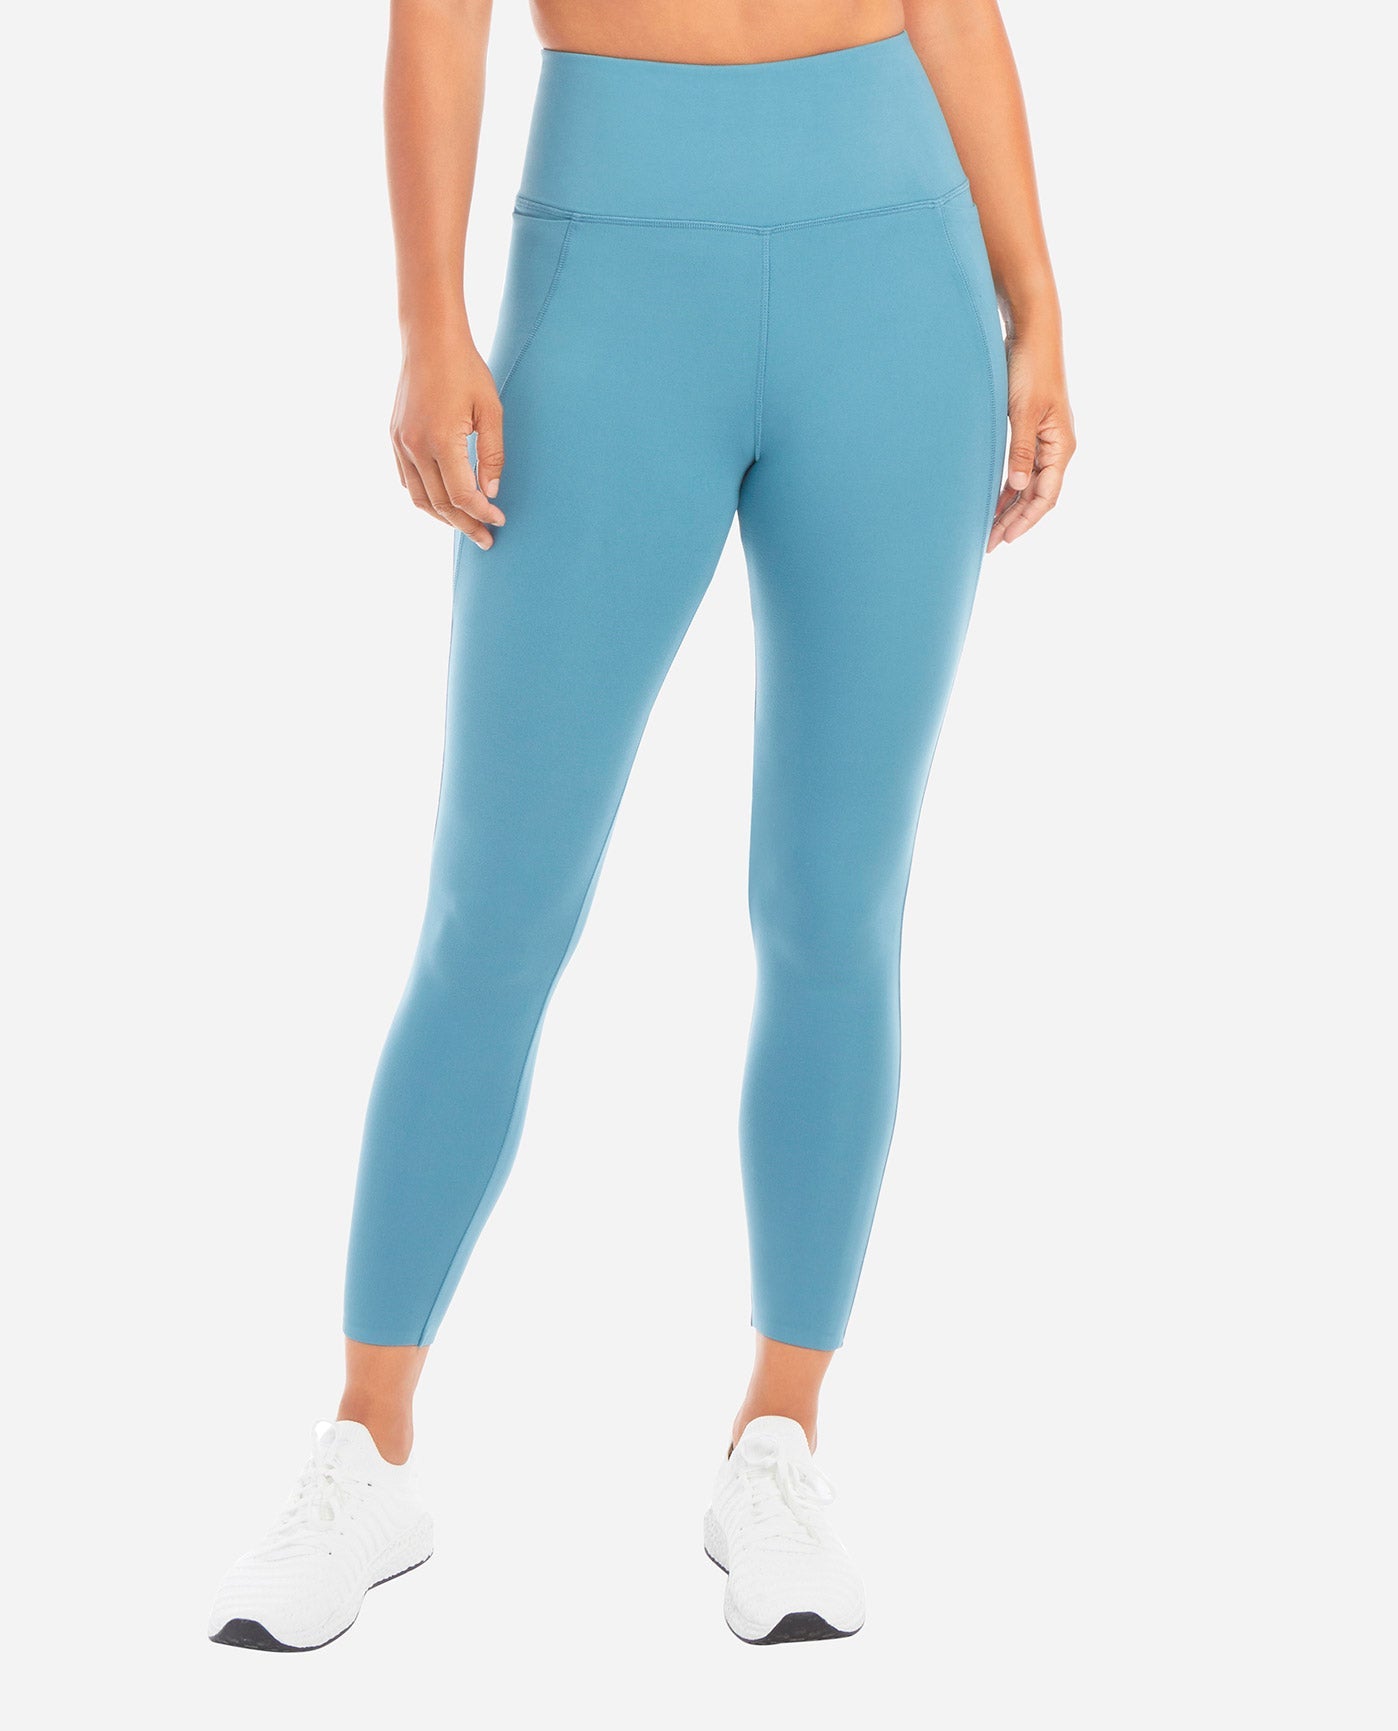 Danskin Blue/light blue yoga pants size XL  Leggings are not pants, Light  blue yoga pants, Blue yoga pants